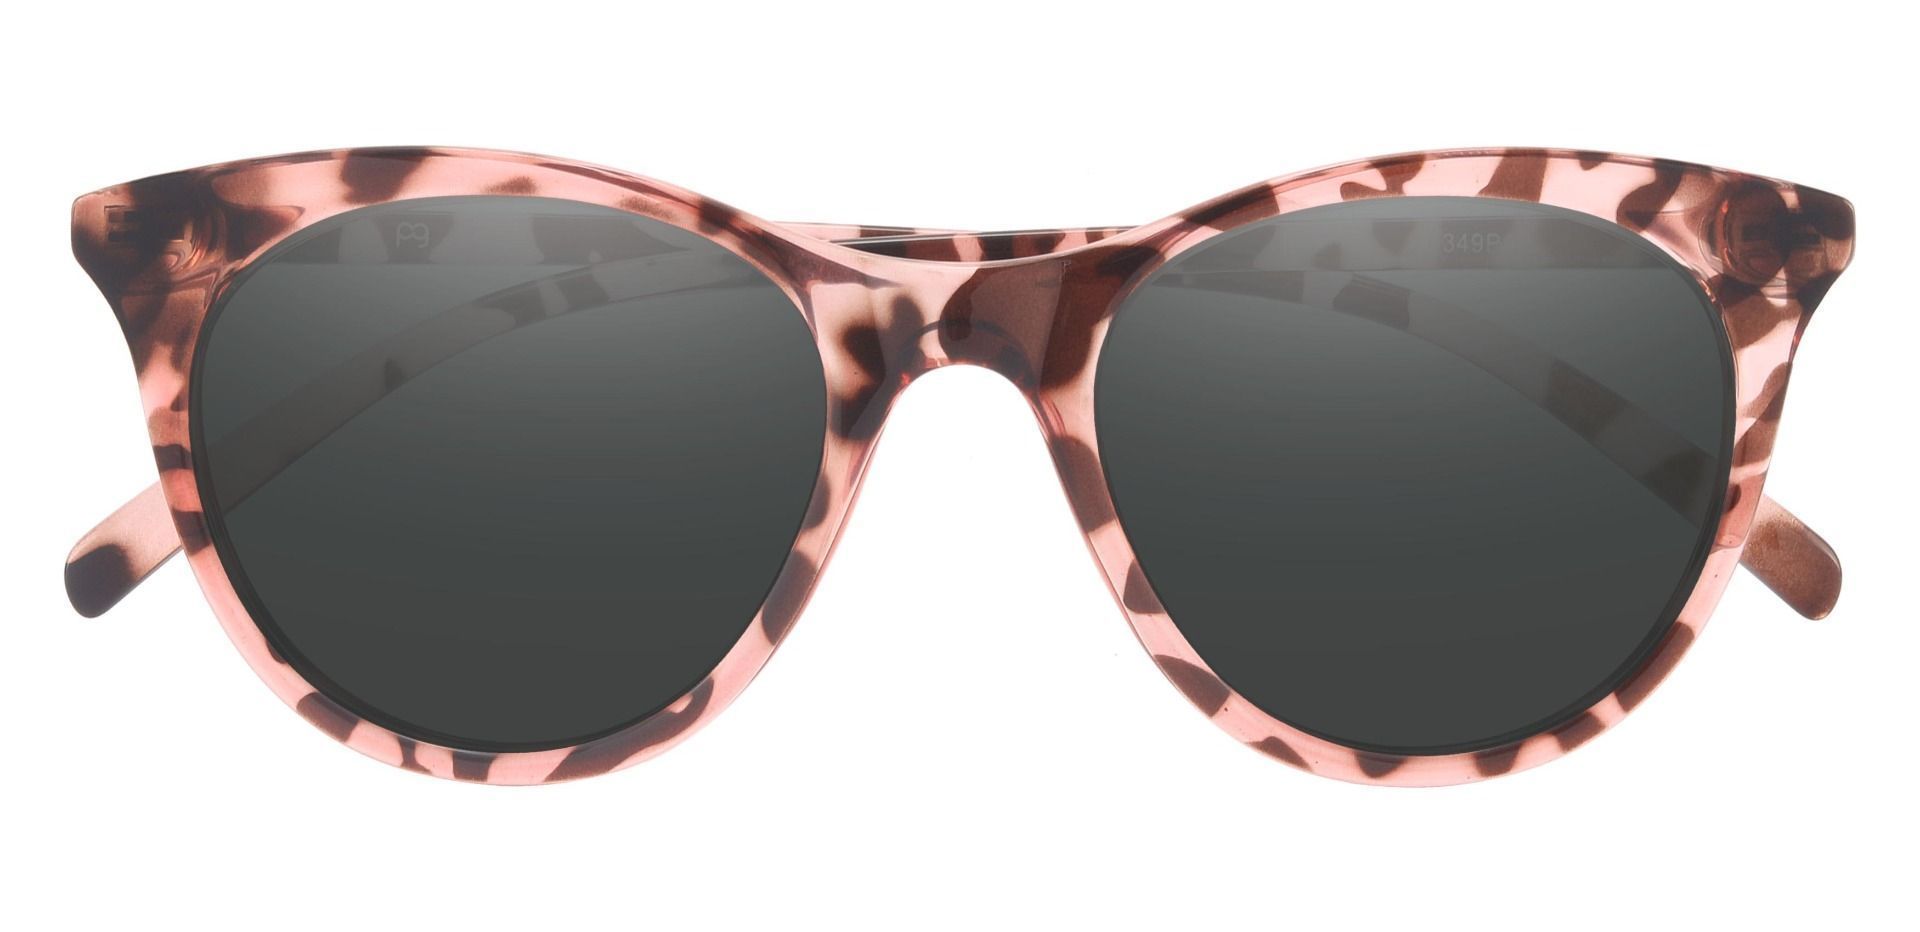 Valencia Cat Eye Prescription Sunglasses - Pink Frame With Gray Lenses